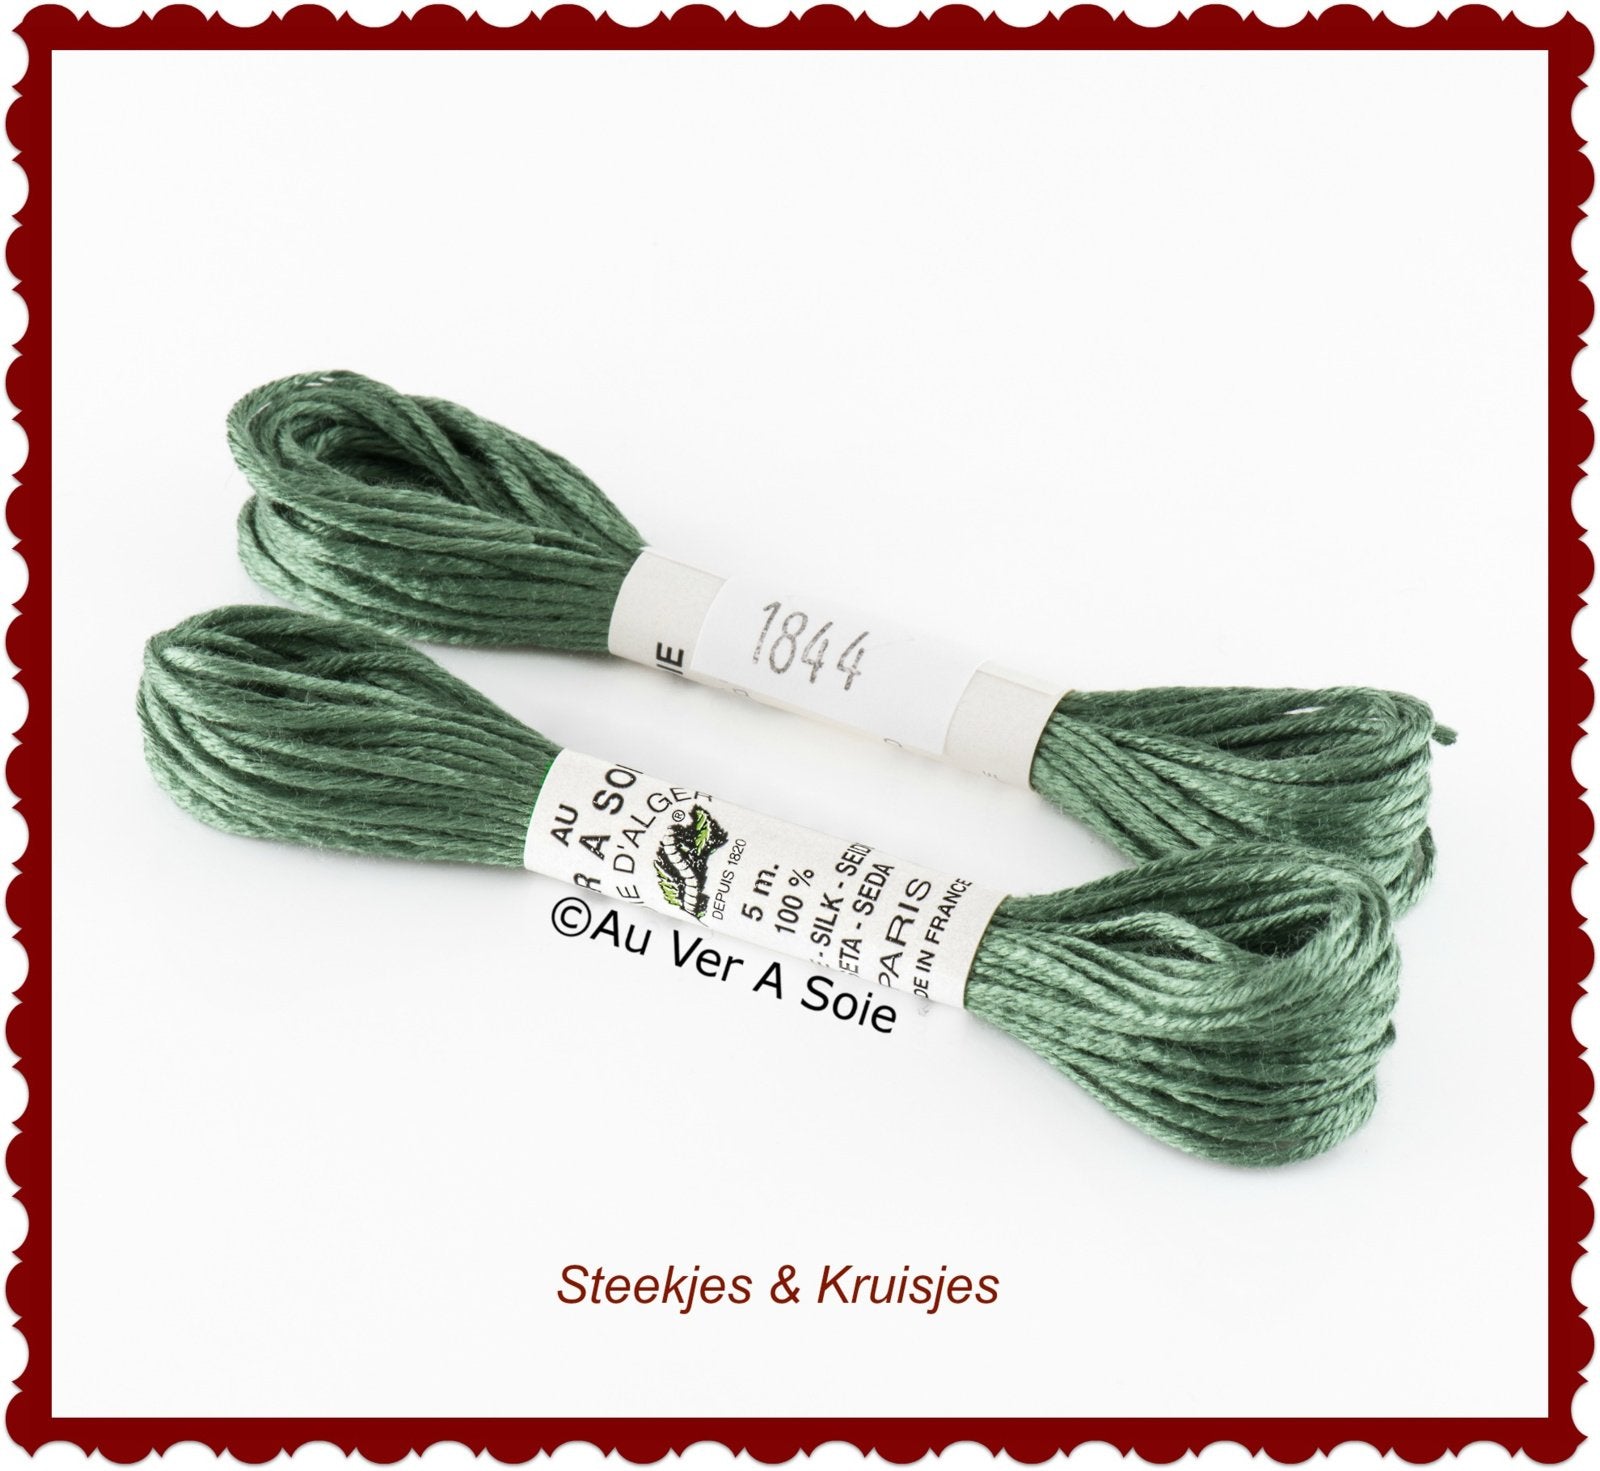 Au ver ie "soie d'alger" silk yarn color no. 1844